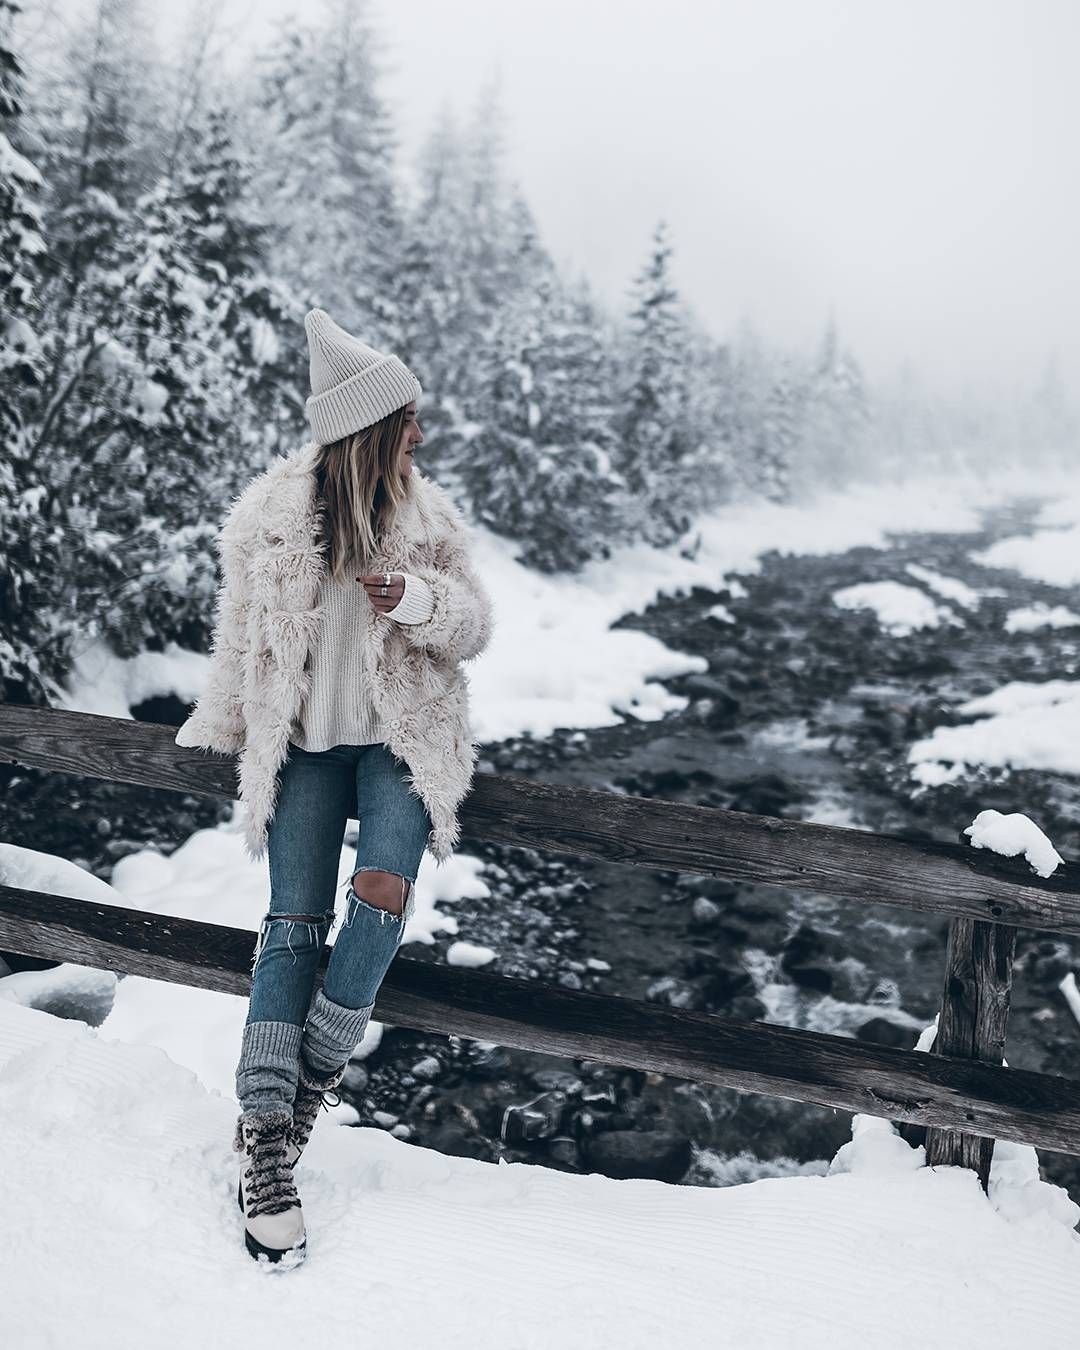 Фото Девушка Зима Снег Со Спины